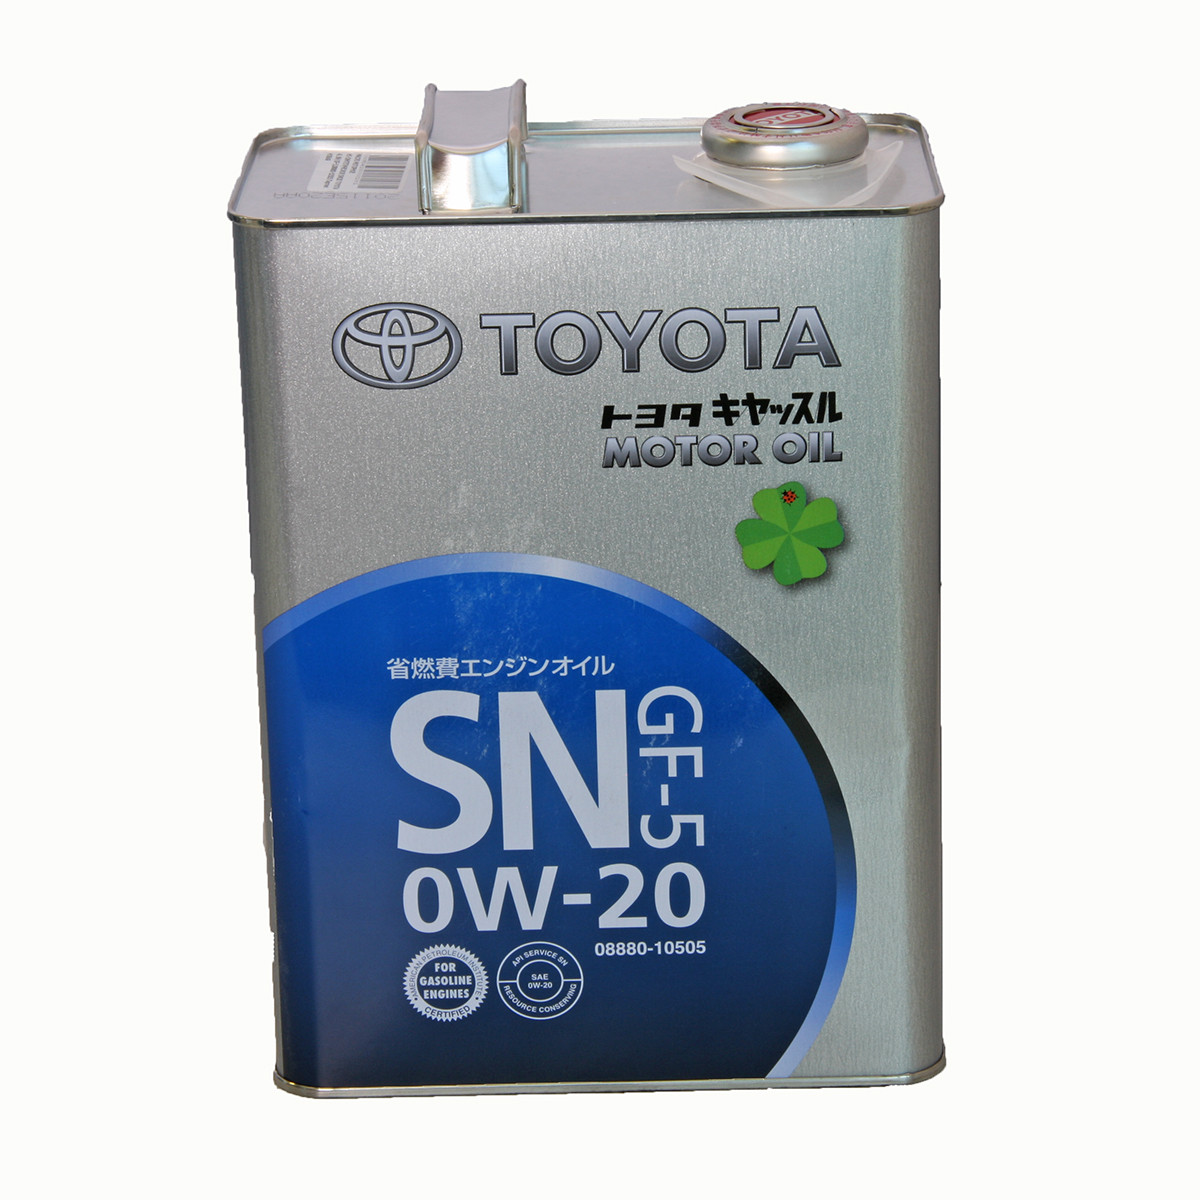 Масло 0w20. Toyota Motor Oil gf-5 SN 0w20. Toyota 0w20 SN gf-5. Toyota Motor Oil 0w-20. Toyota 0w20 SN 4л.